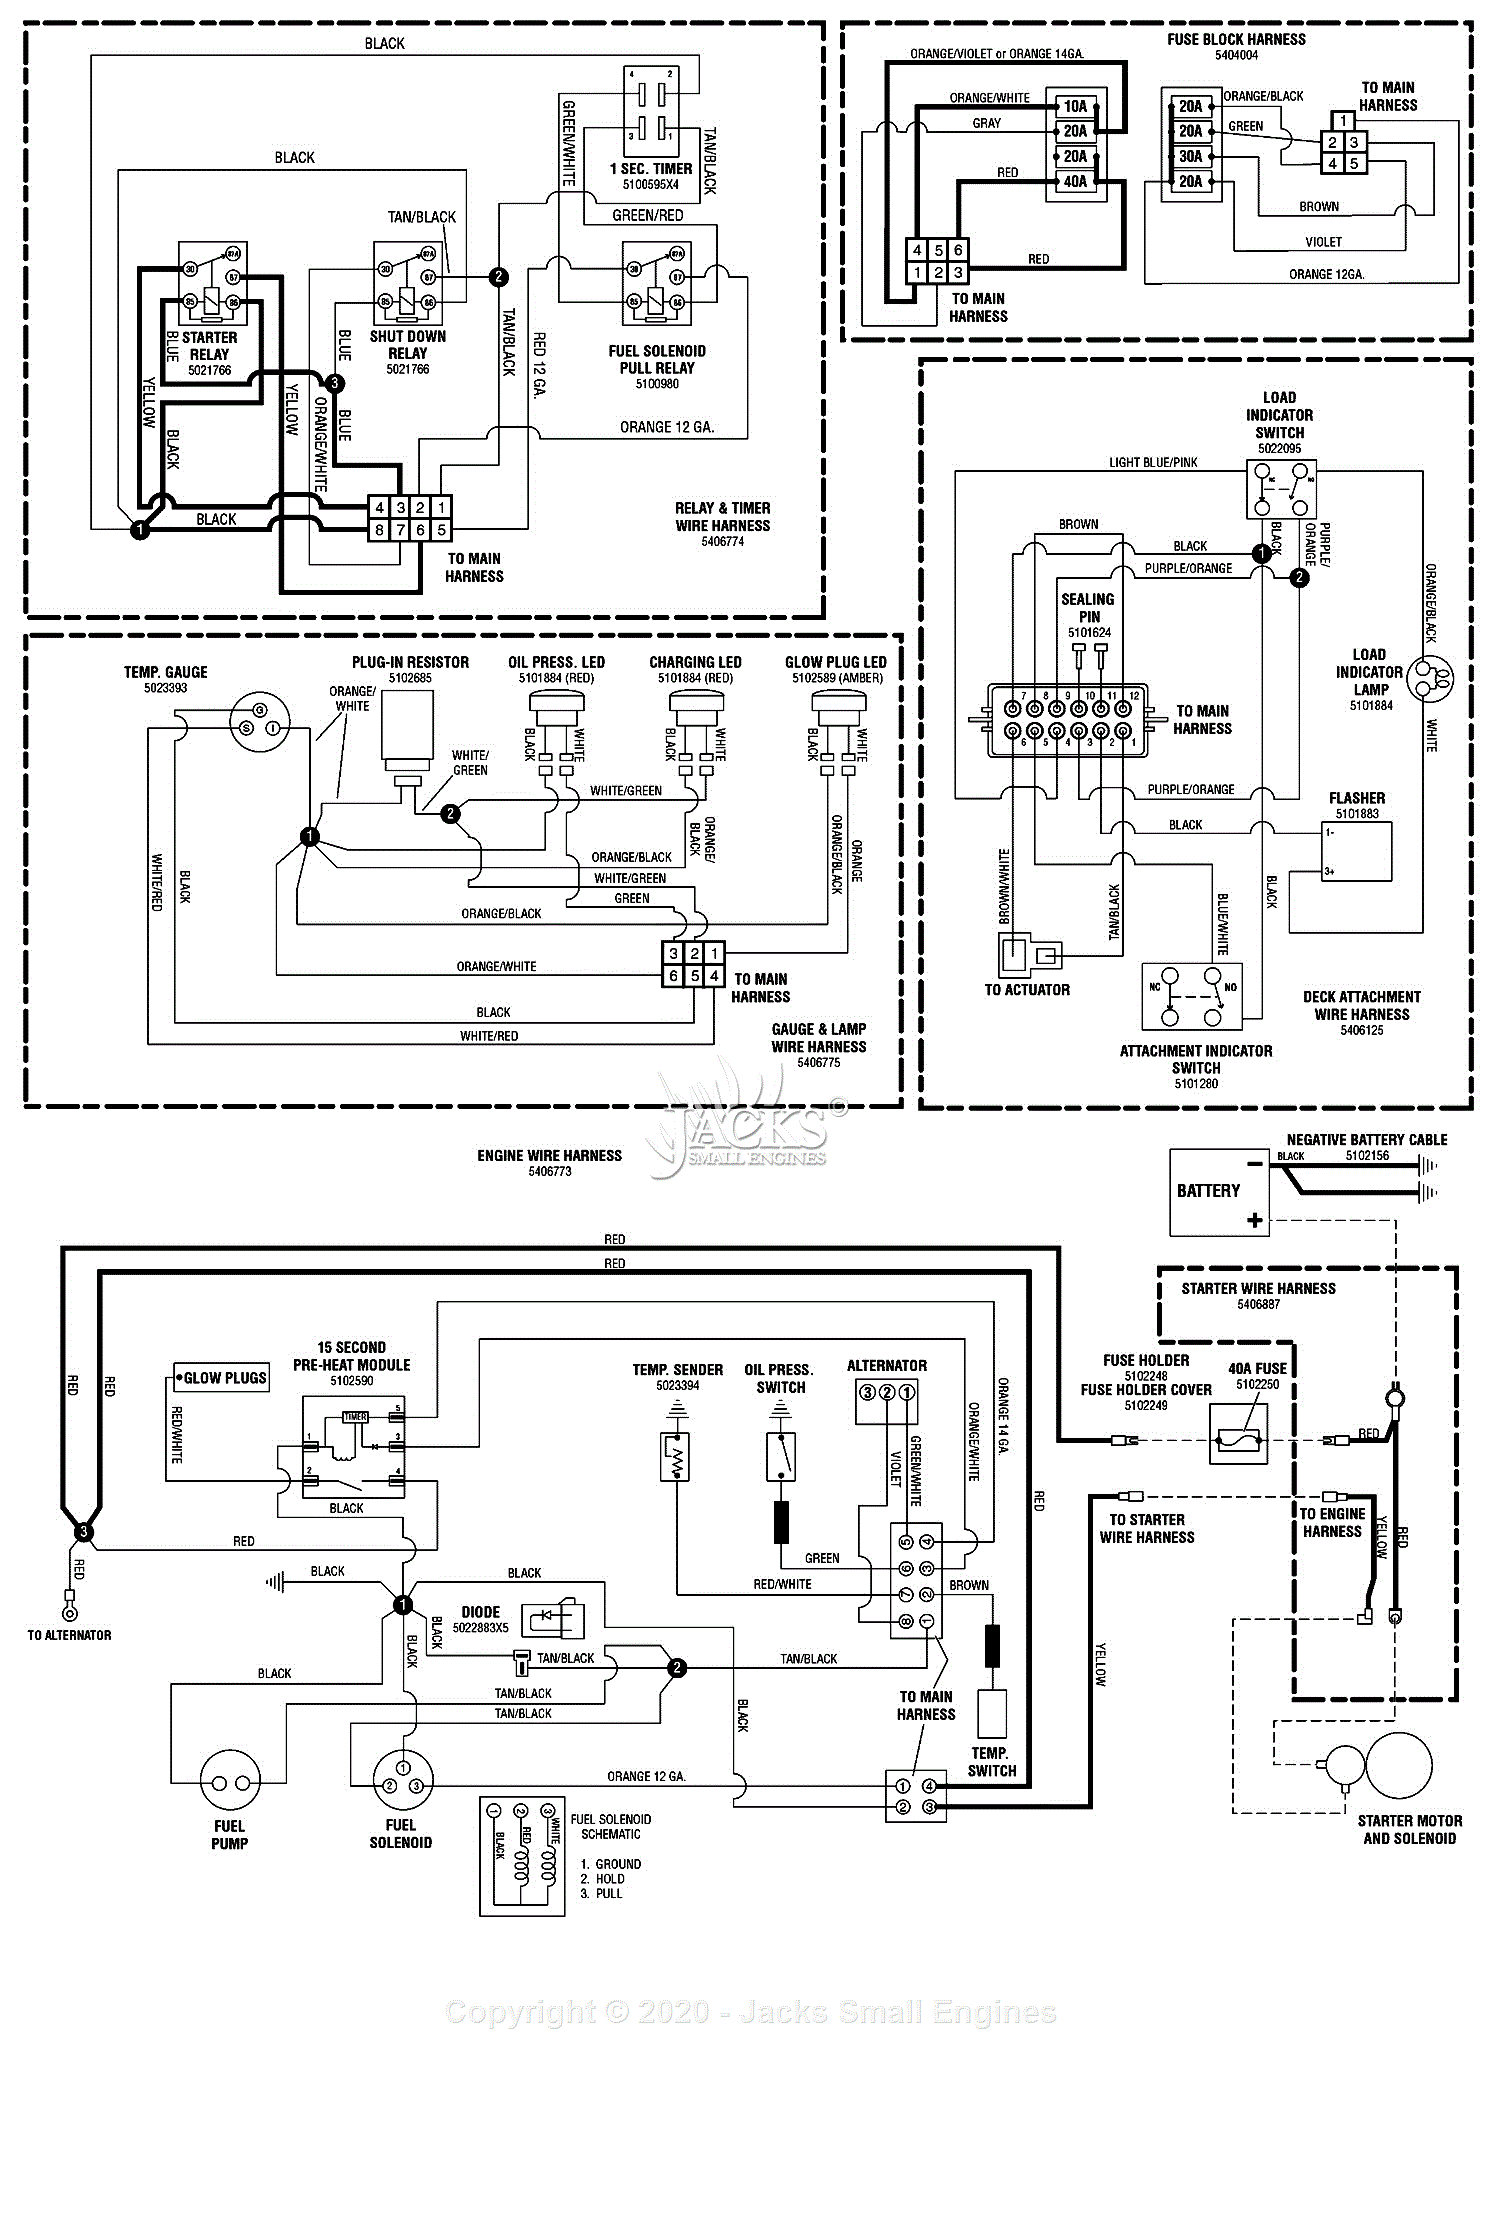 Ferris Electrical Schematics Parts Diagram for Electrical Schematic